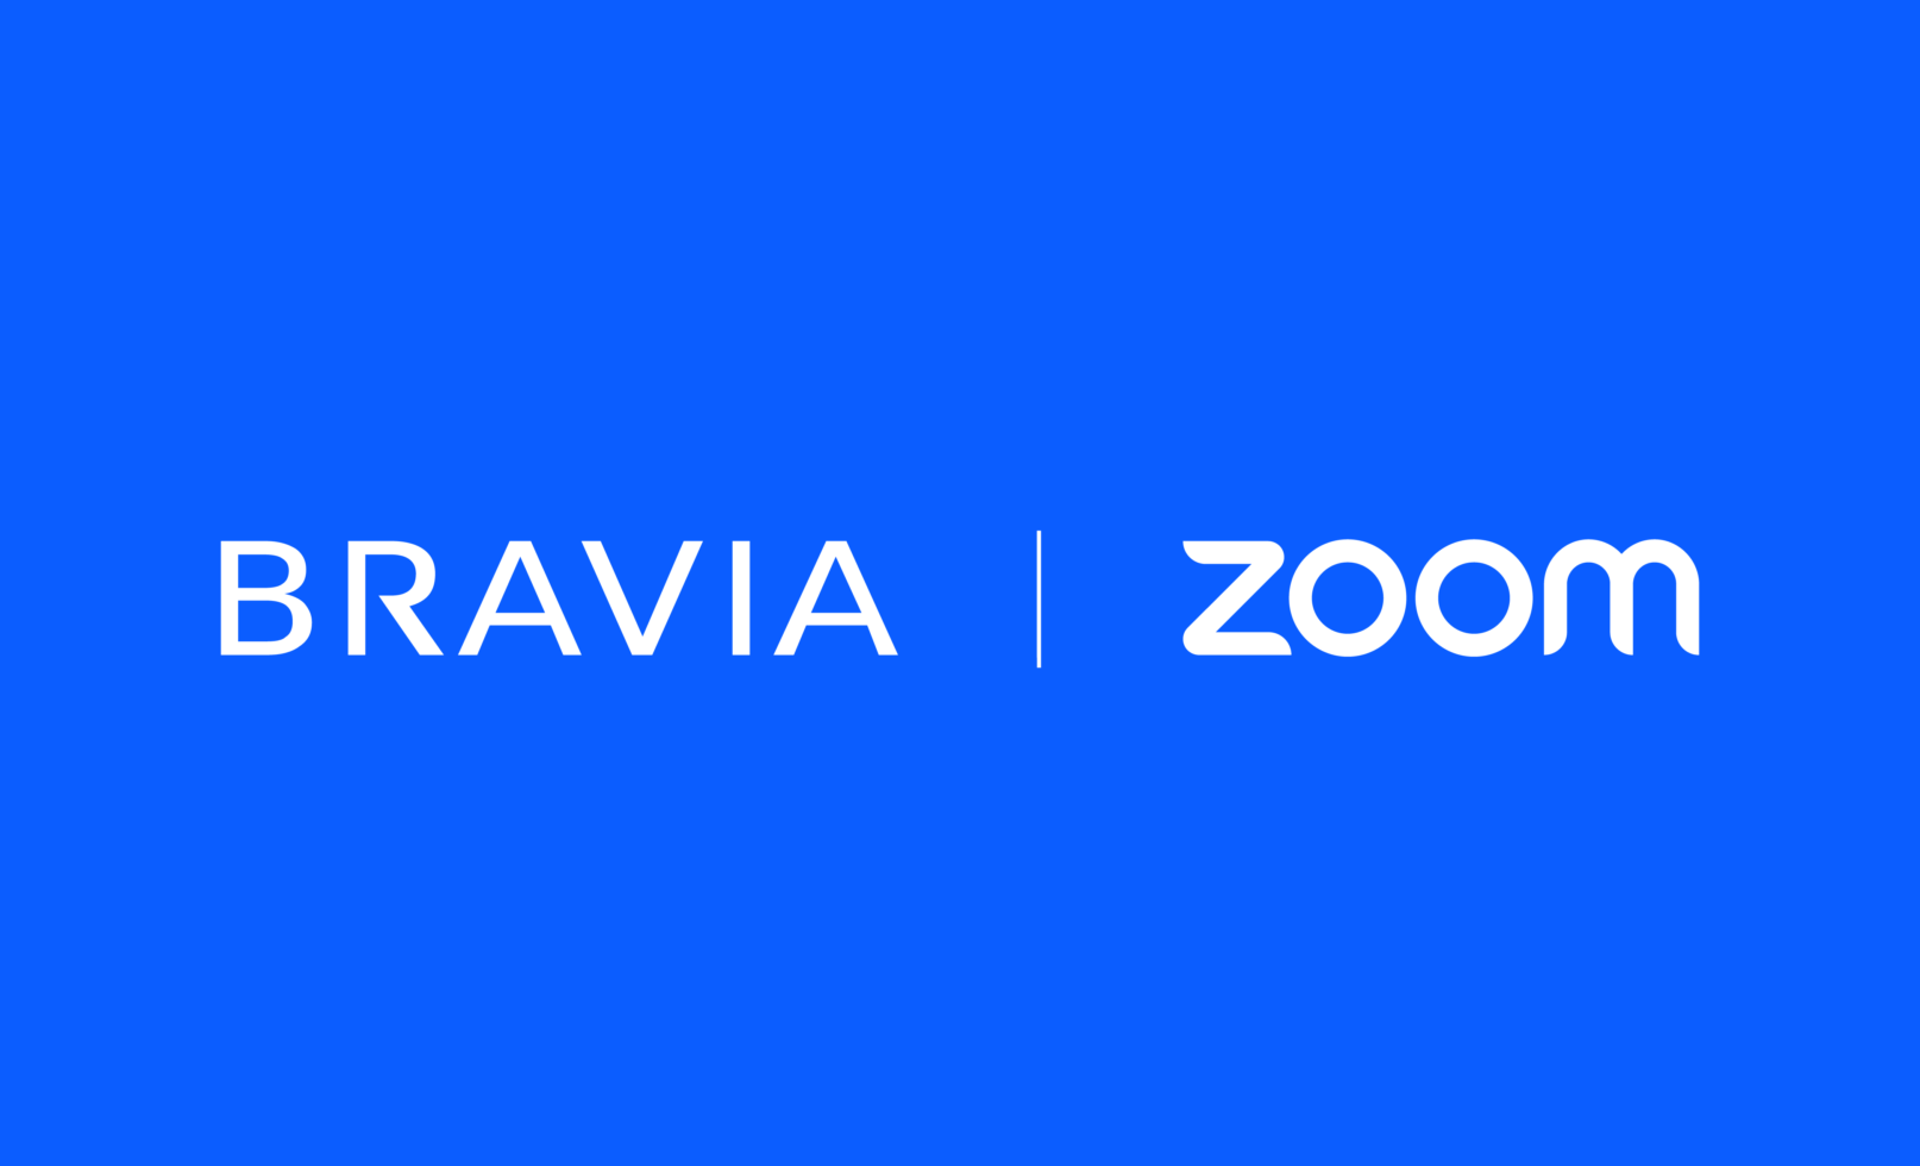 Sony-Bravia-Zoom-Logo-Lock-up_White-on-Blue-1_landscape_2400x980.png